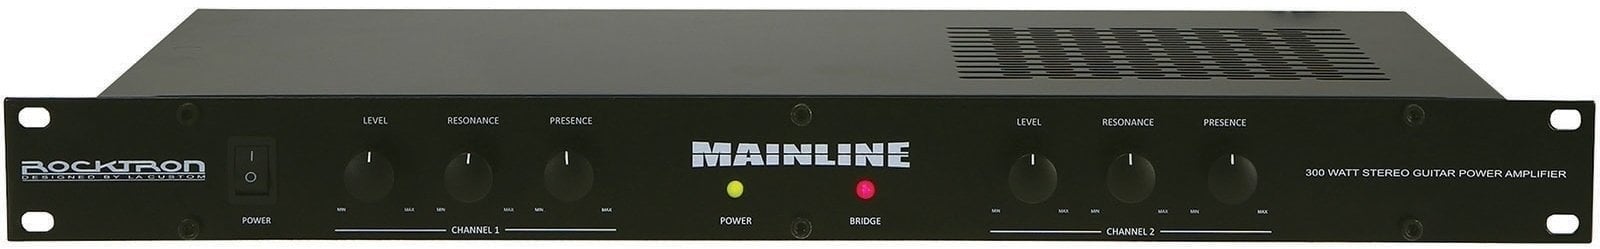 Pré-amplificador/amplificador em rack Rocktron Mainline